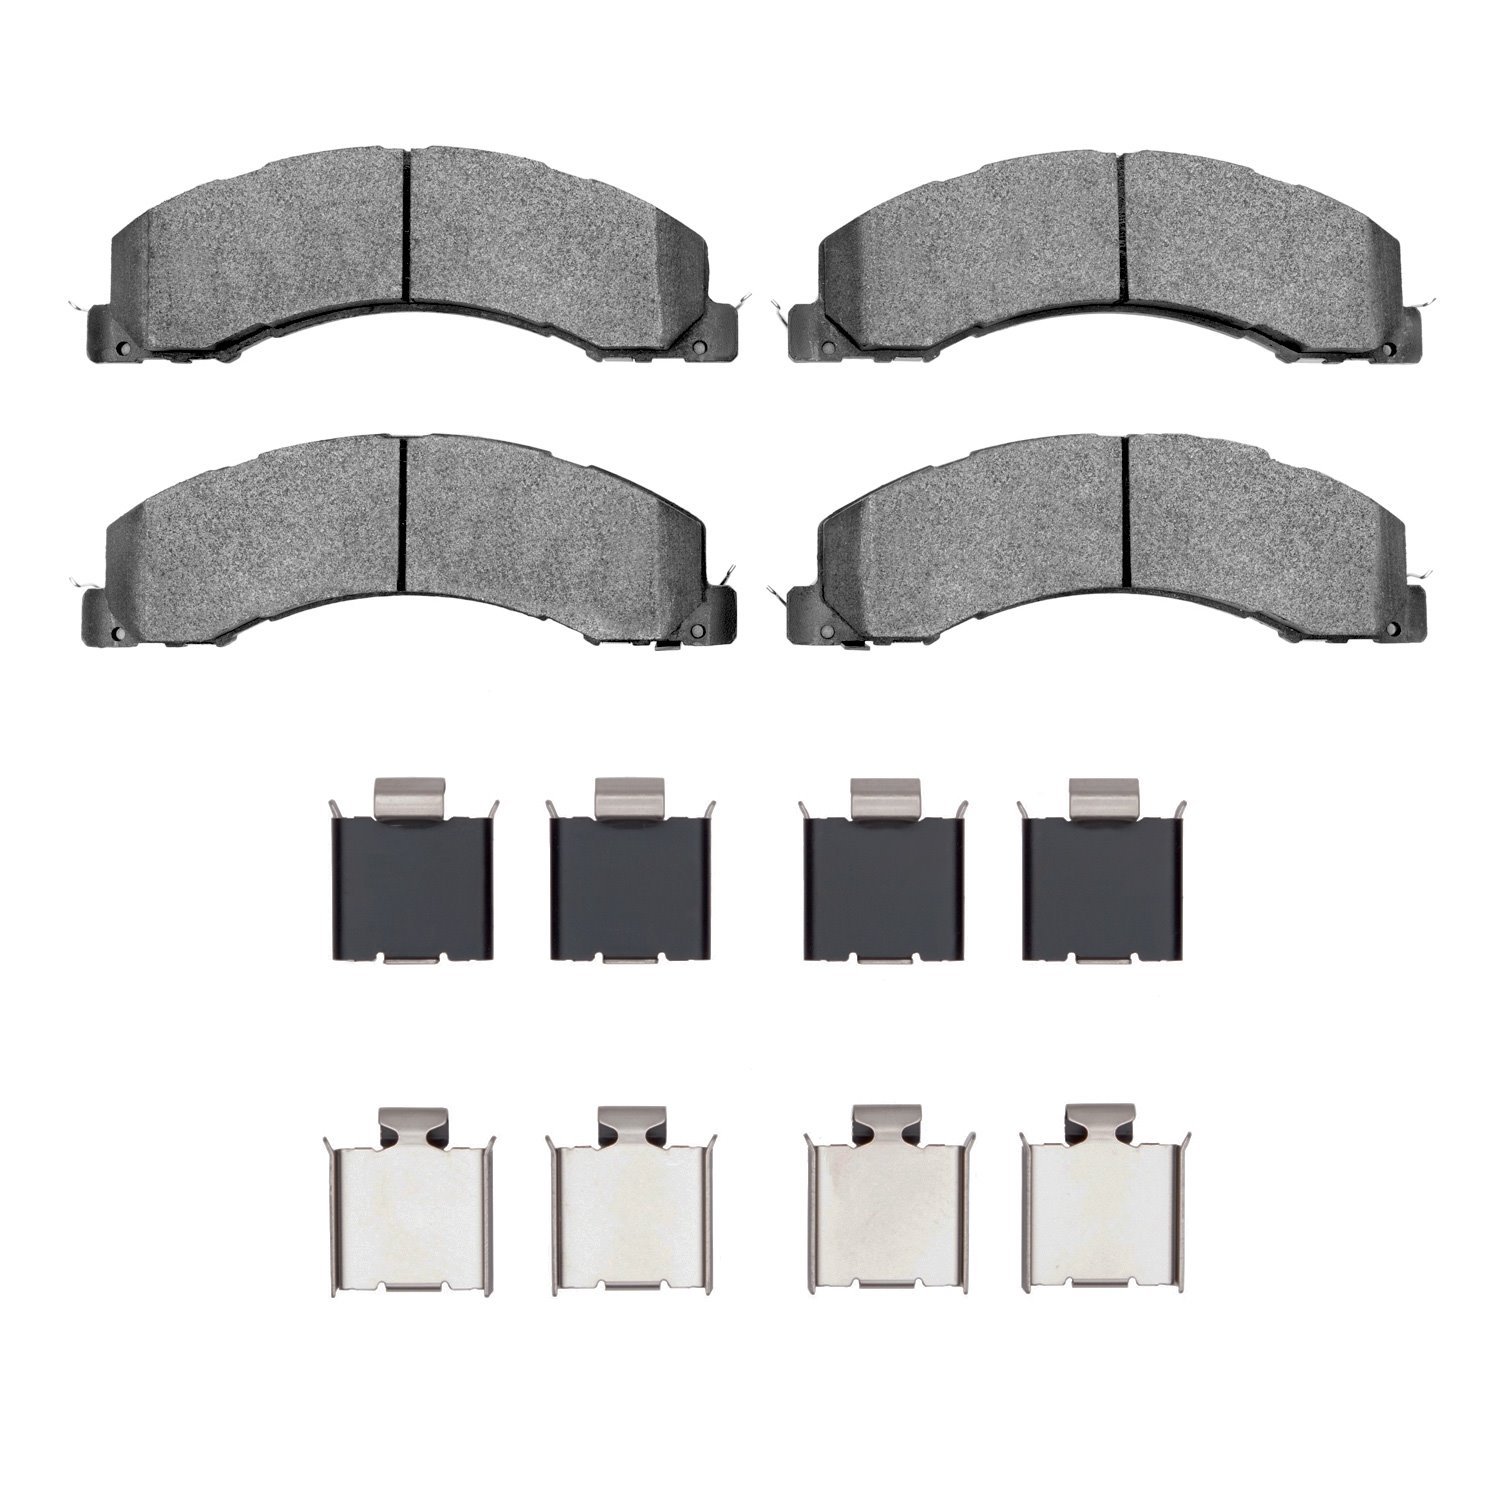 Semi-Metallic Brake Pads & Hardware Kit, 2008-2021 Fits Multiple Makes/Models, Position: Front & Rear